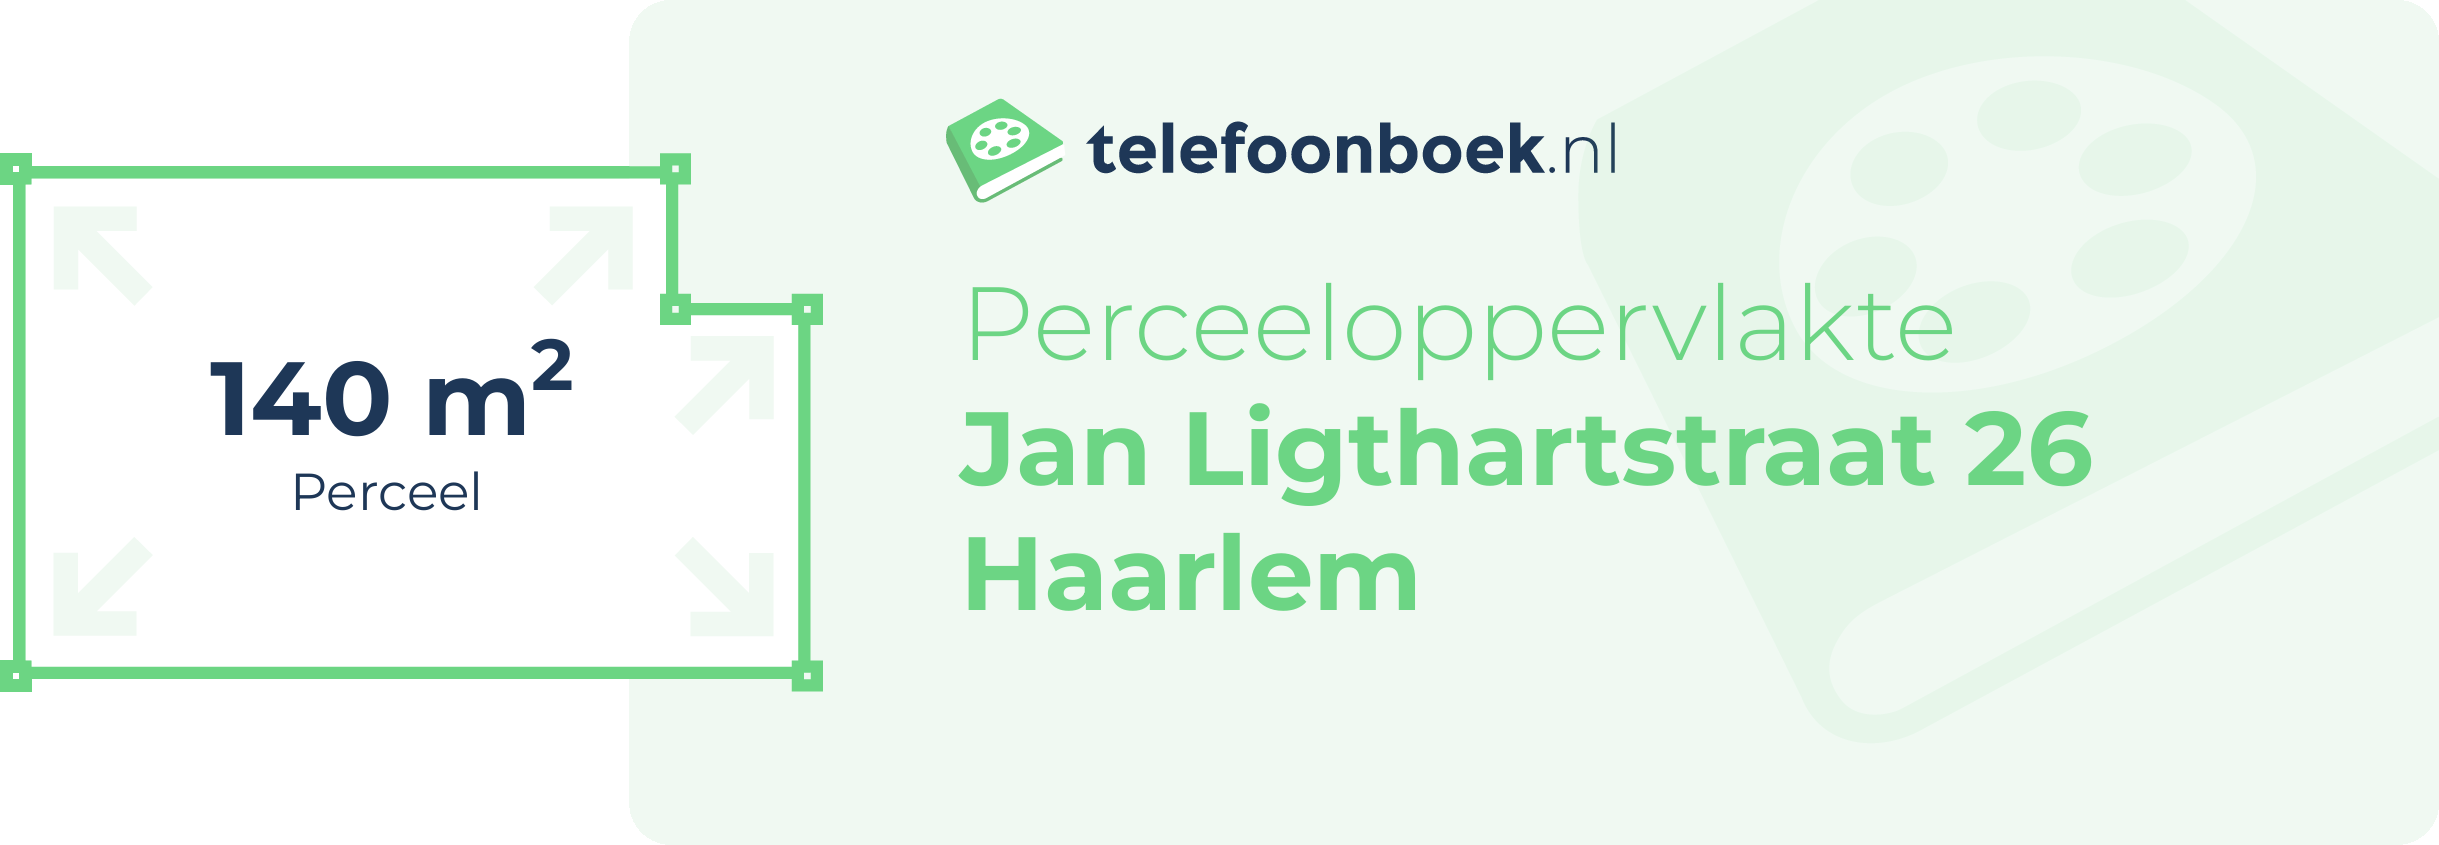 Perceeloppervlakte Jan Ligthartstraat 26 Haarlem